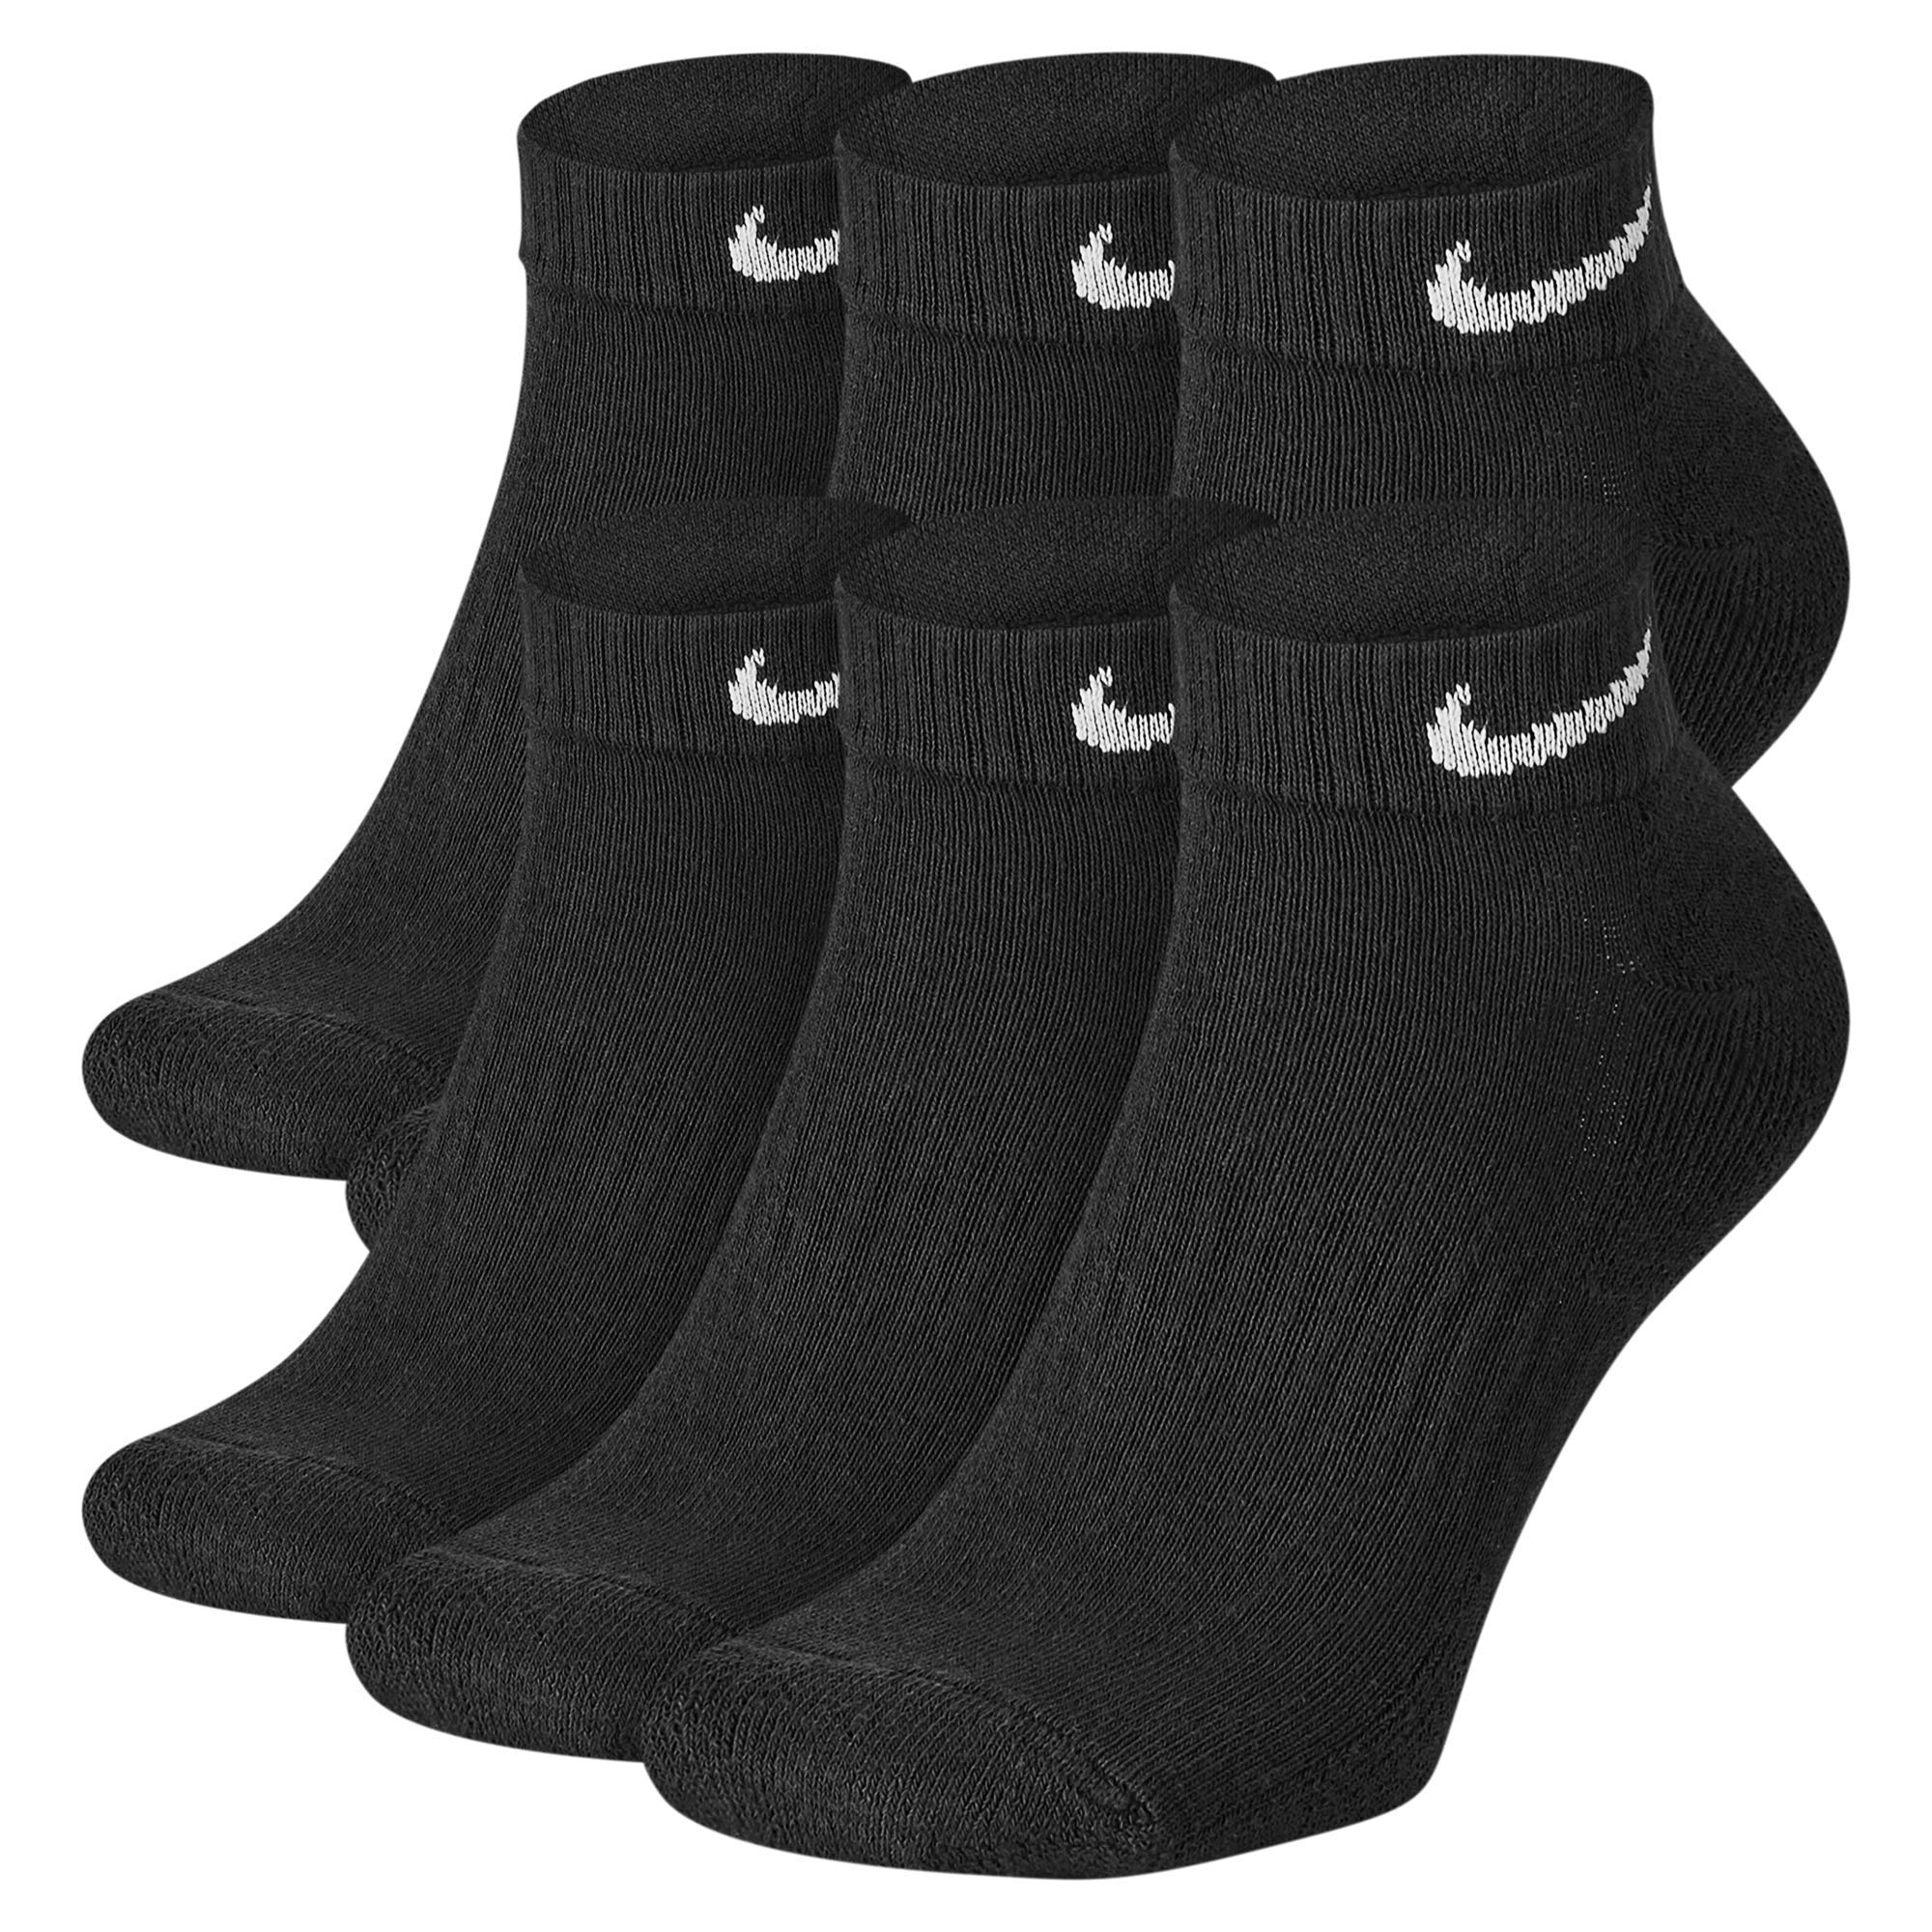 Nike Everyday Cushion Low Training Socks